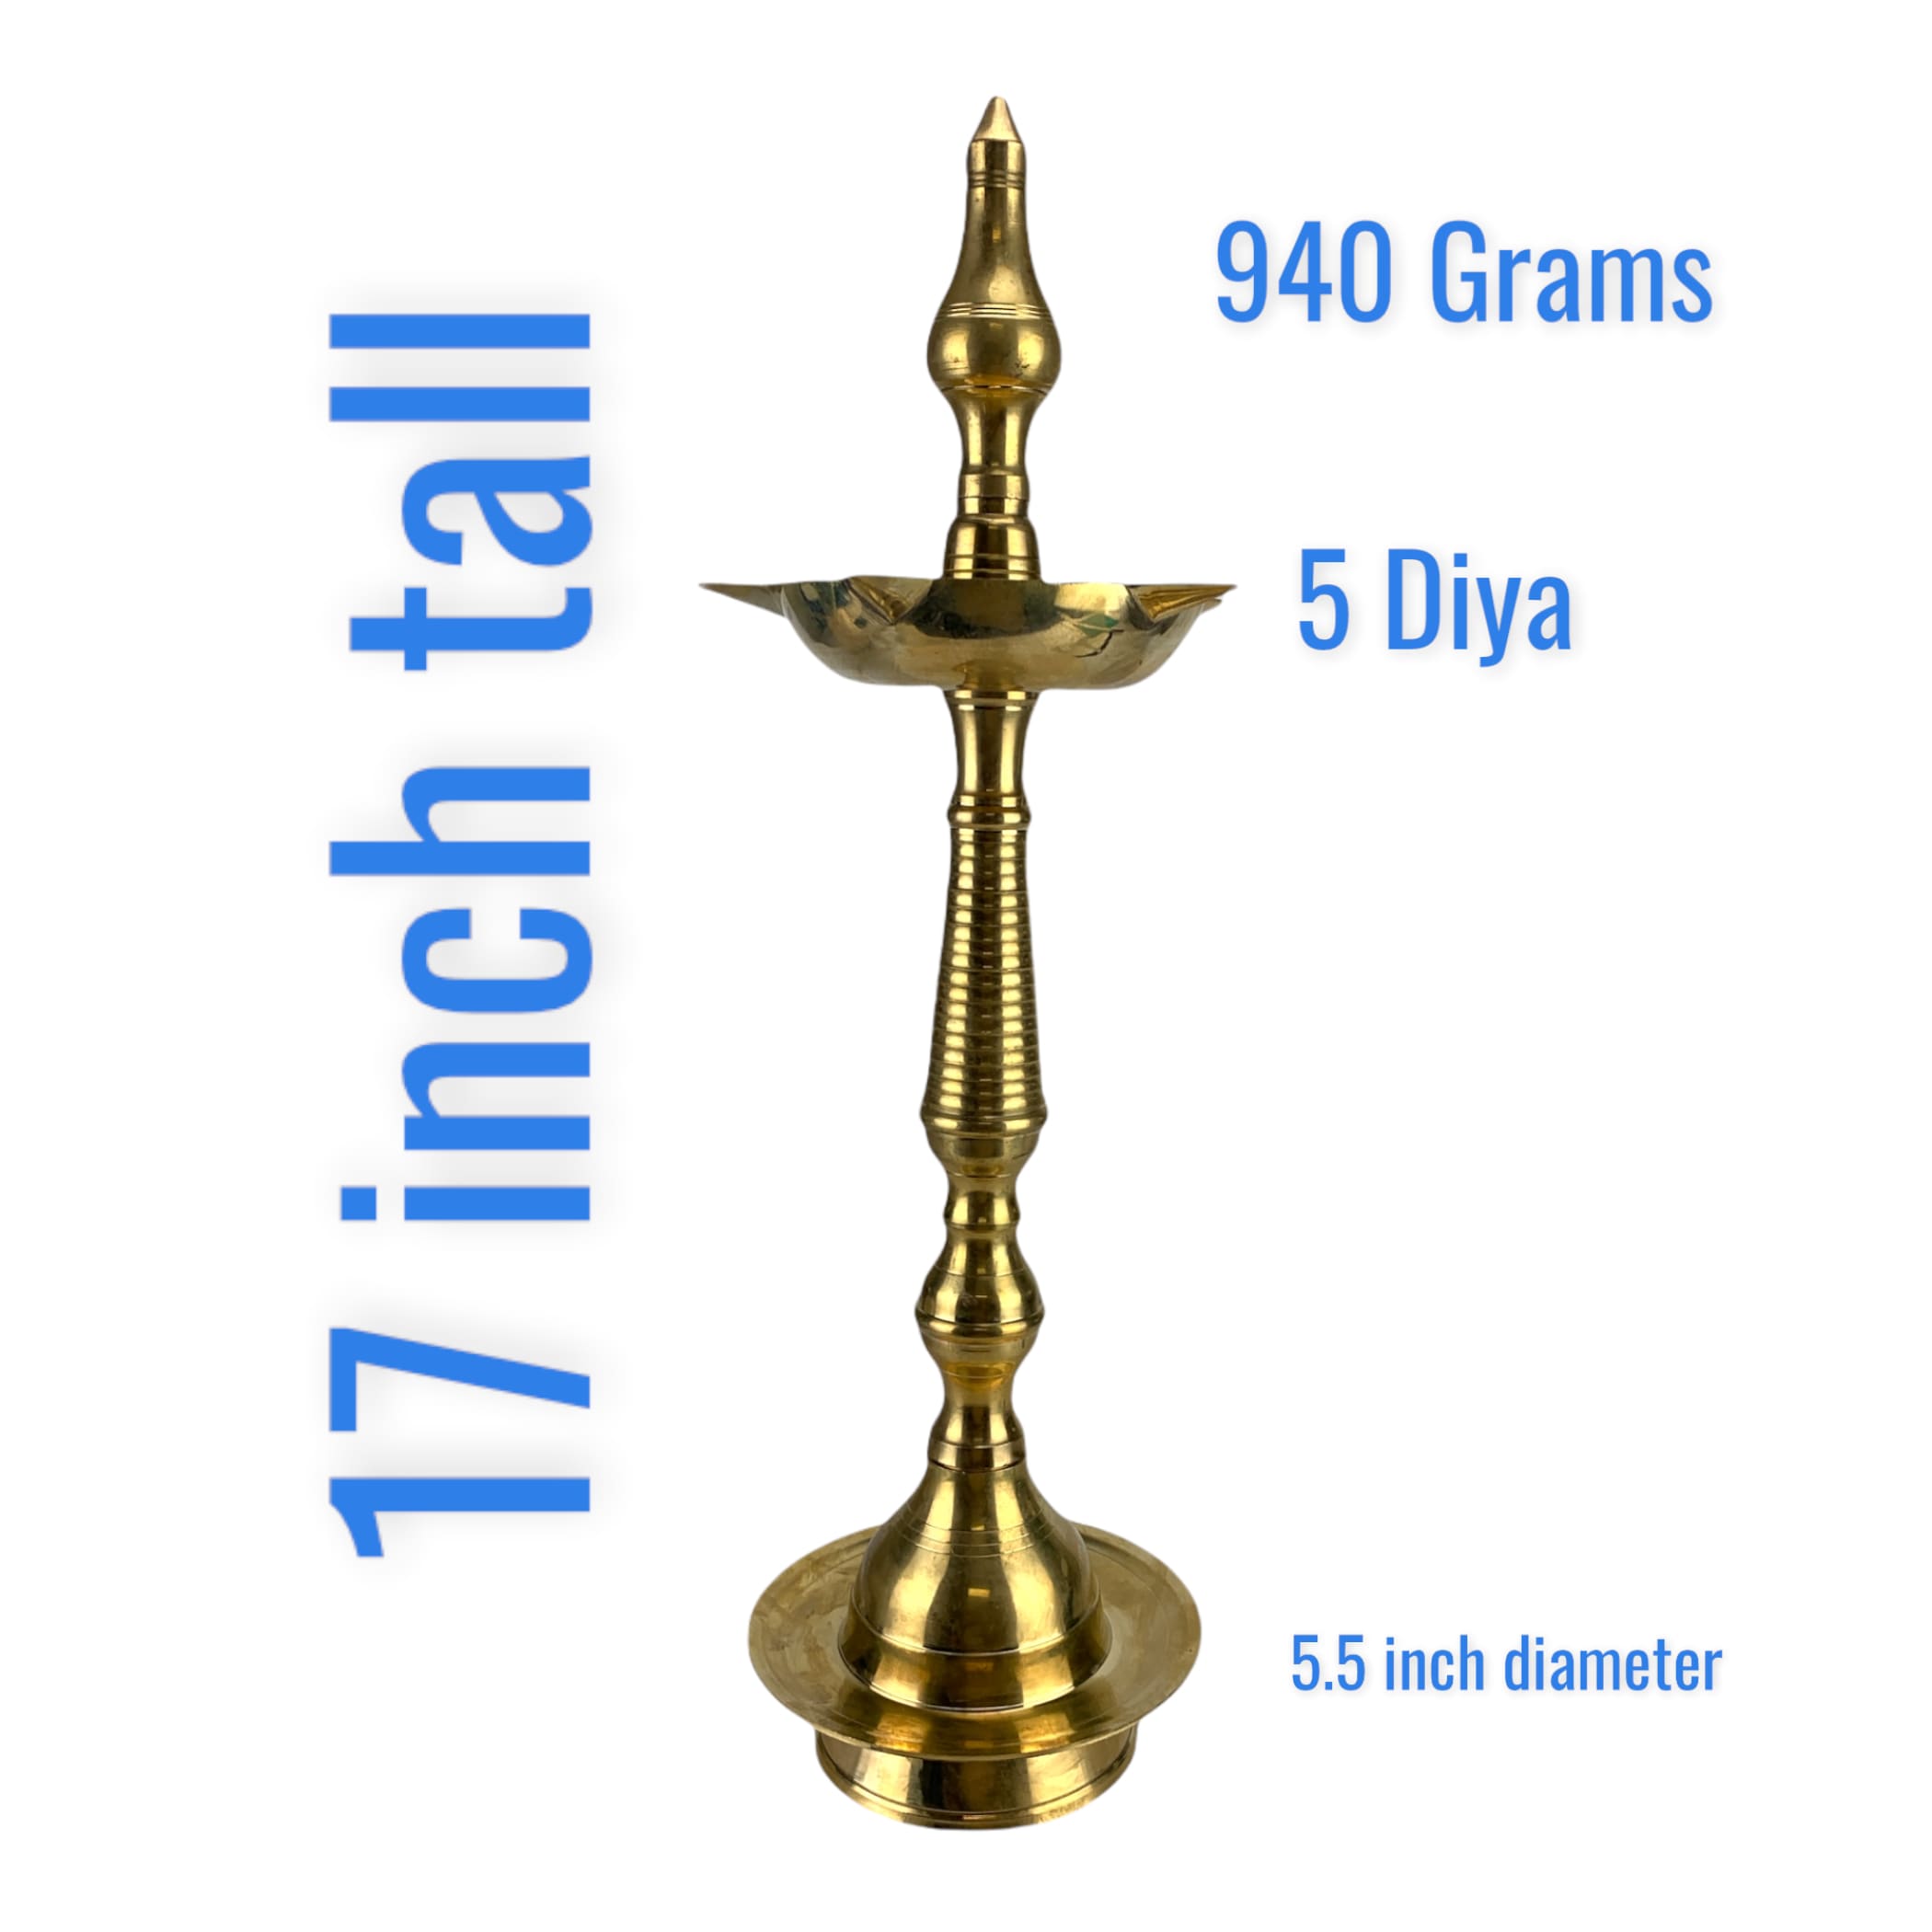 Brass oil lamp diya samai deepak kerala traditional kutthu